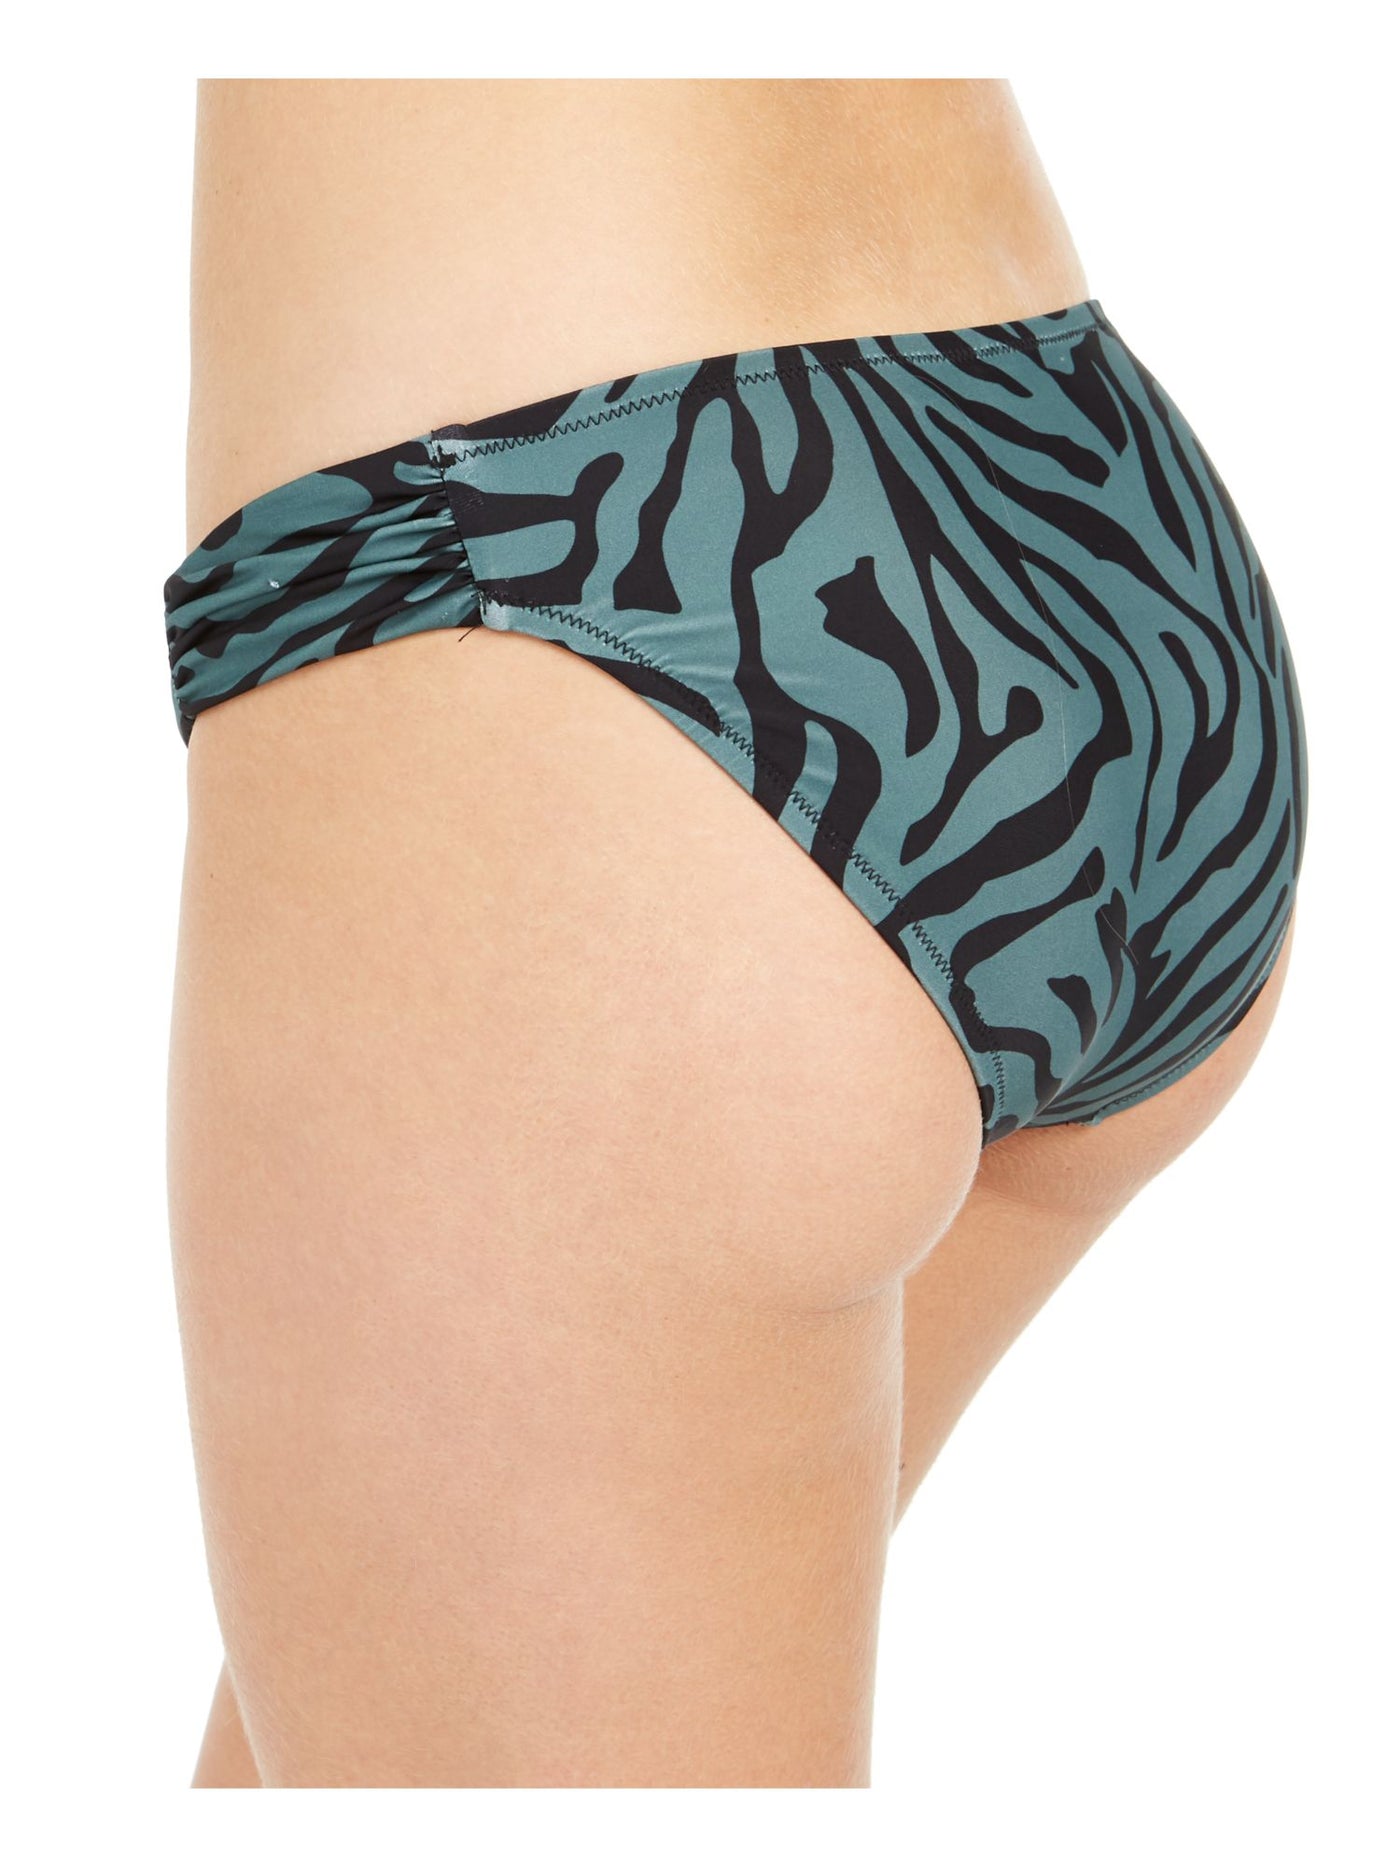 BAR III Women's Green Zebra Print Stretch Lined Full Coverage Side Tab Hipster Swimsuit Bottom L